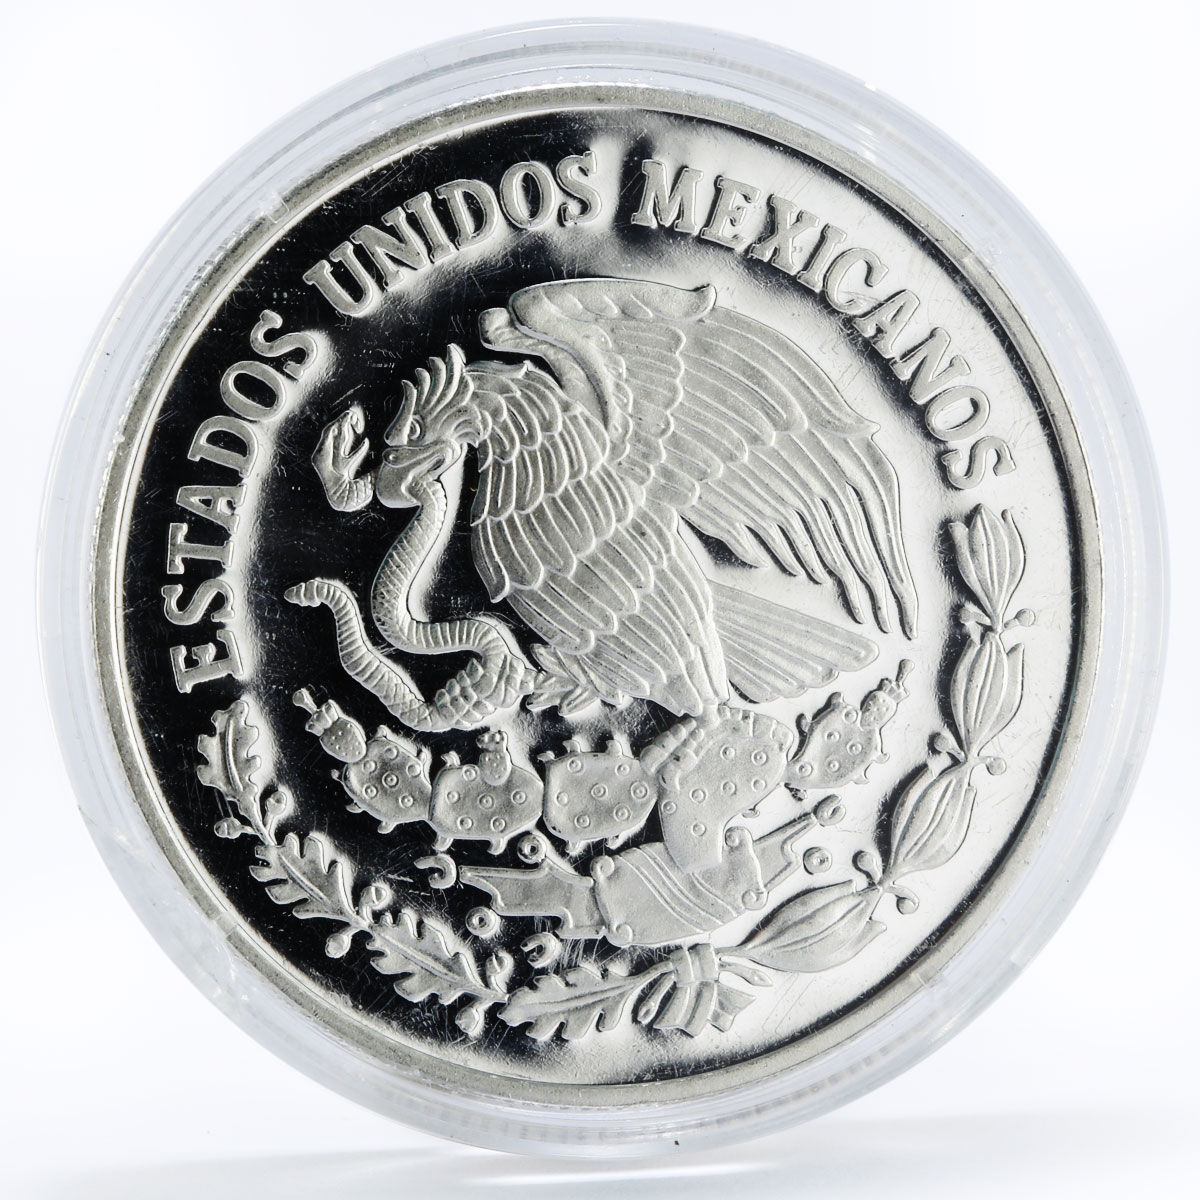 Mexico 5 pesos 2006 World Cup Soccer Games Football proof silver coin 2006